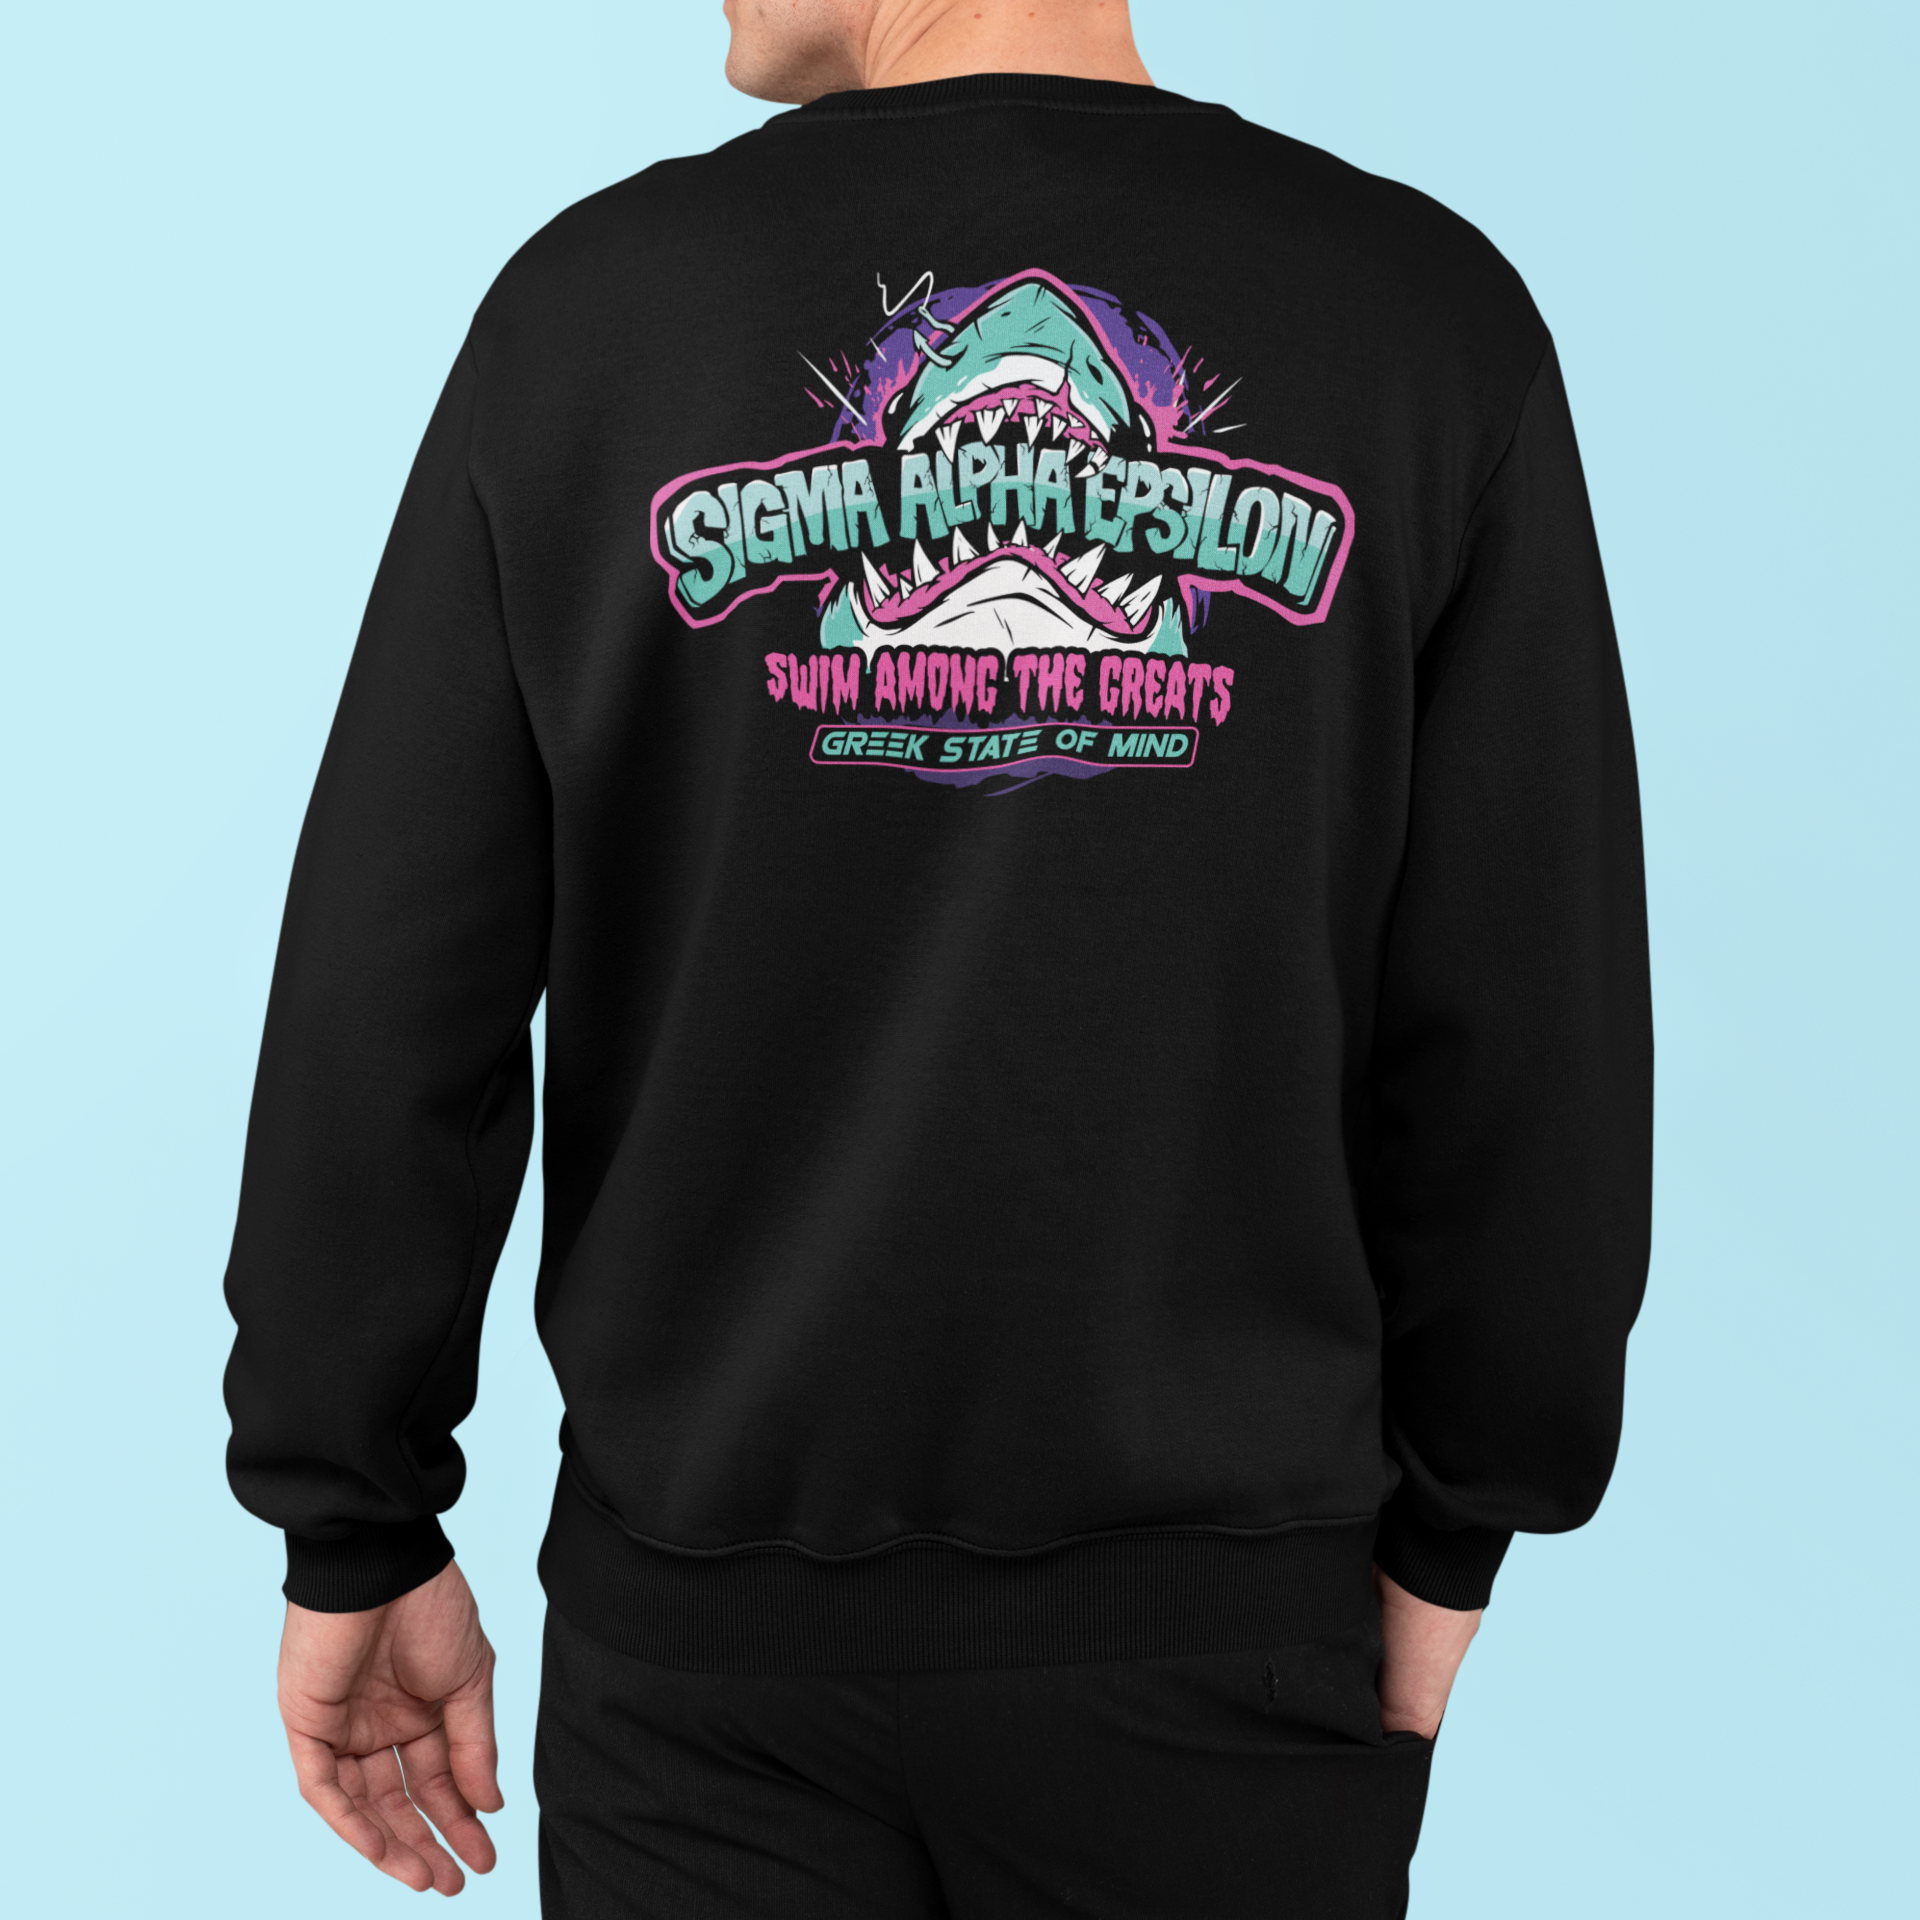 Black Sigma Alpha Epsilon Graphic Crewneck Sweatshirt | The Deep End | Sigma Alpha Epsilon Clothing and Merchandise model 